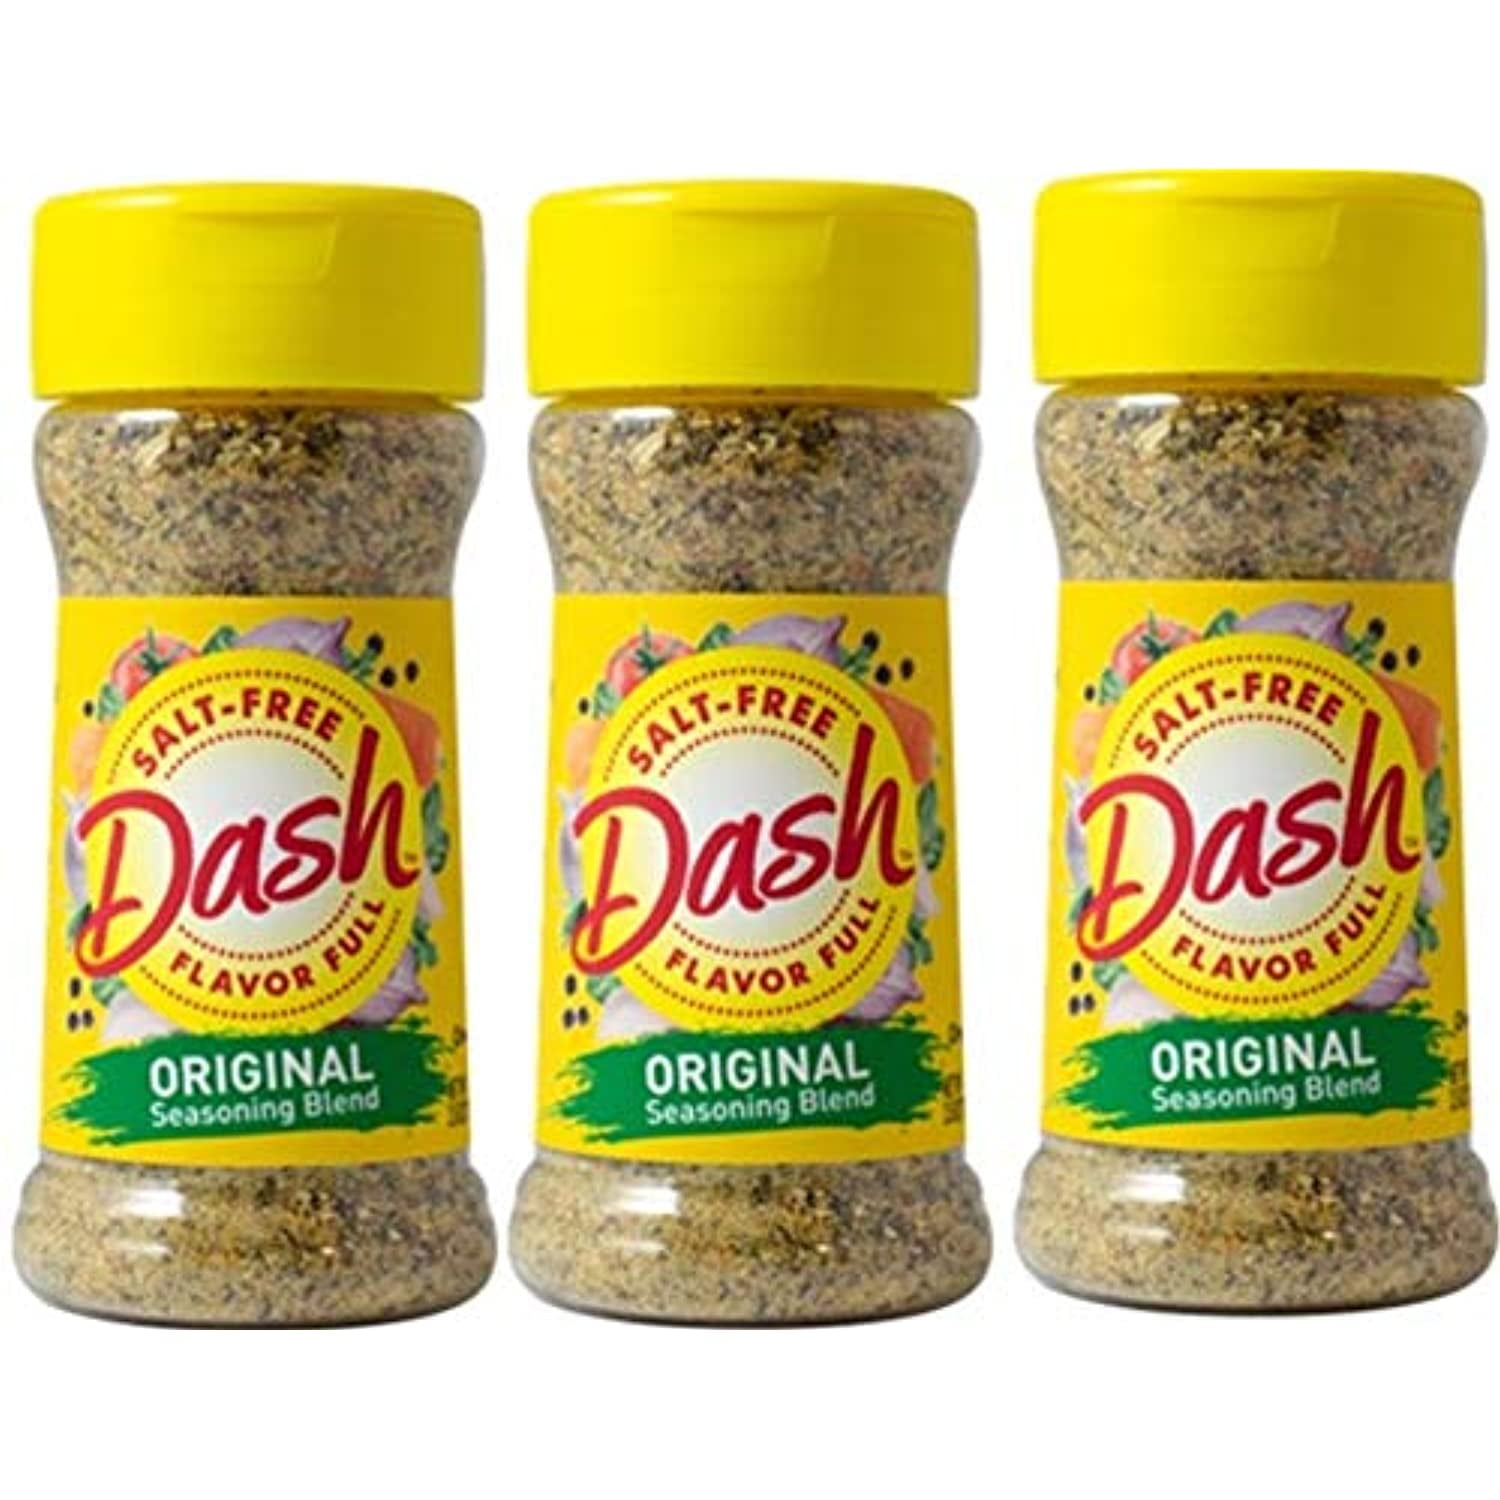 Mrs. Dash 00008 Salt-Free 2.5 Oz. Original Seasoning Blend (Pack